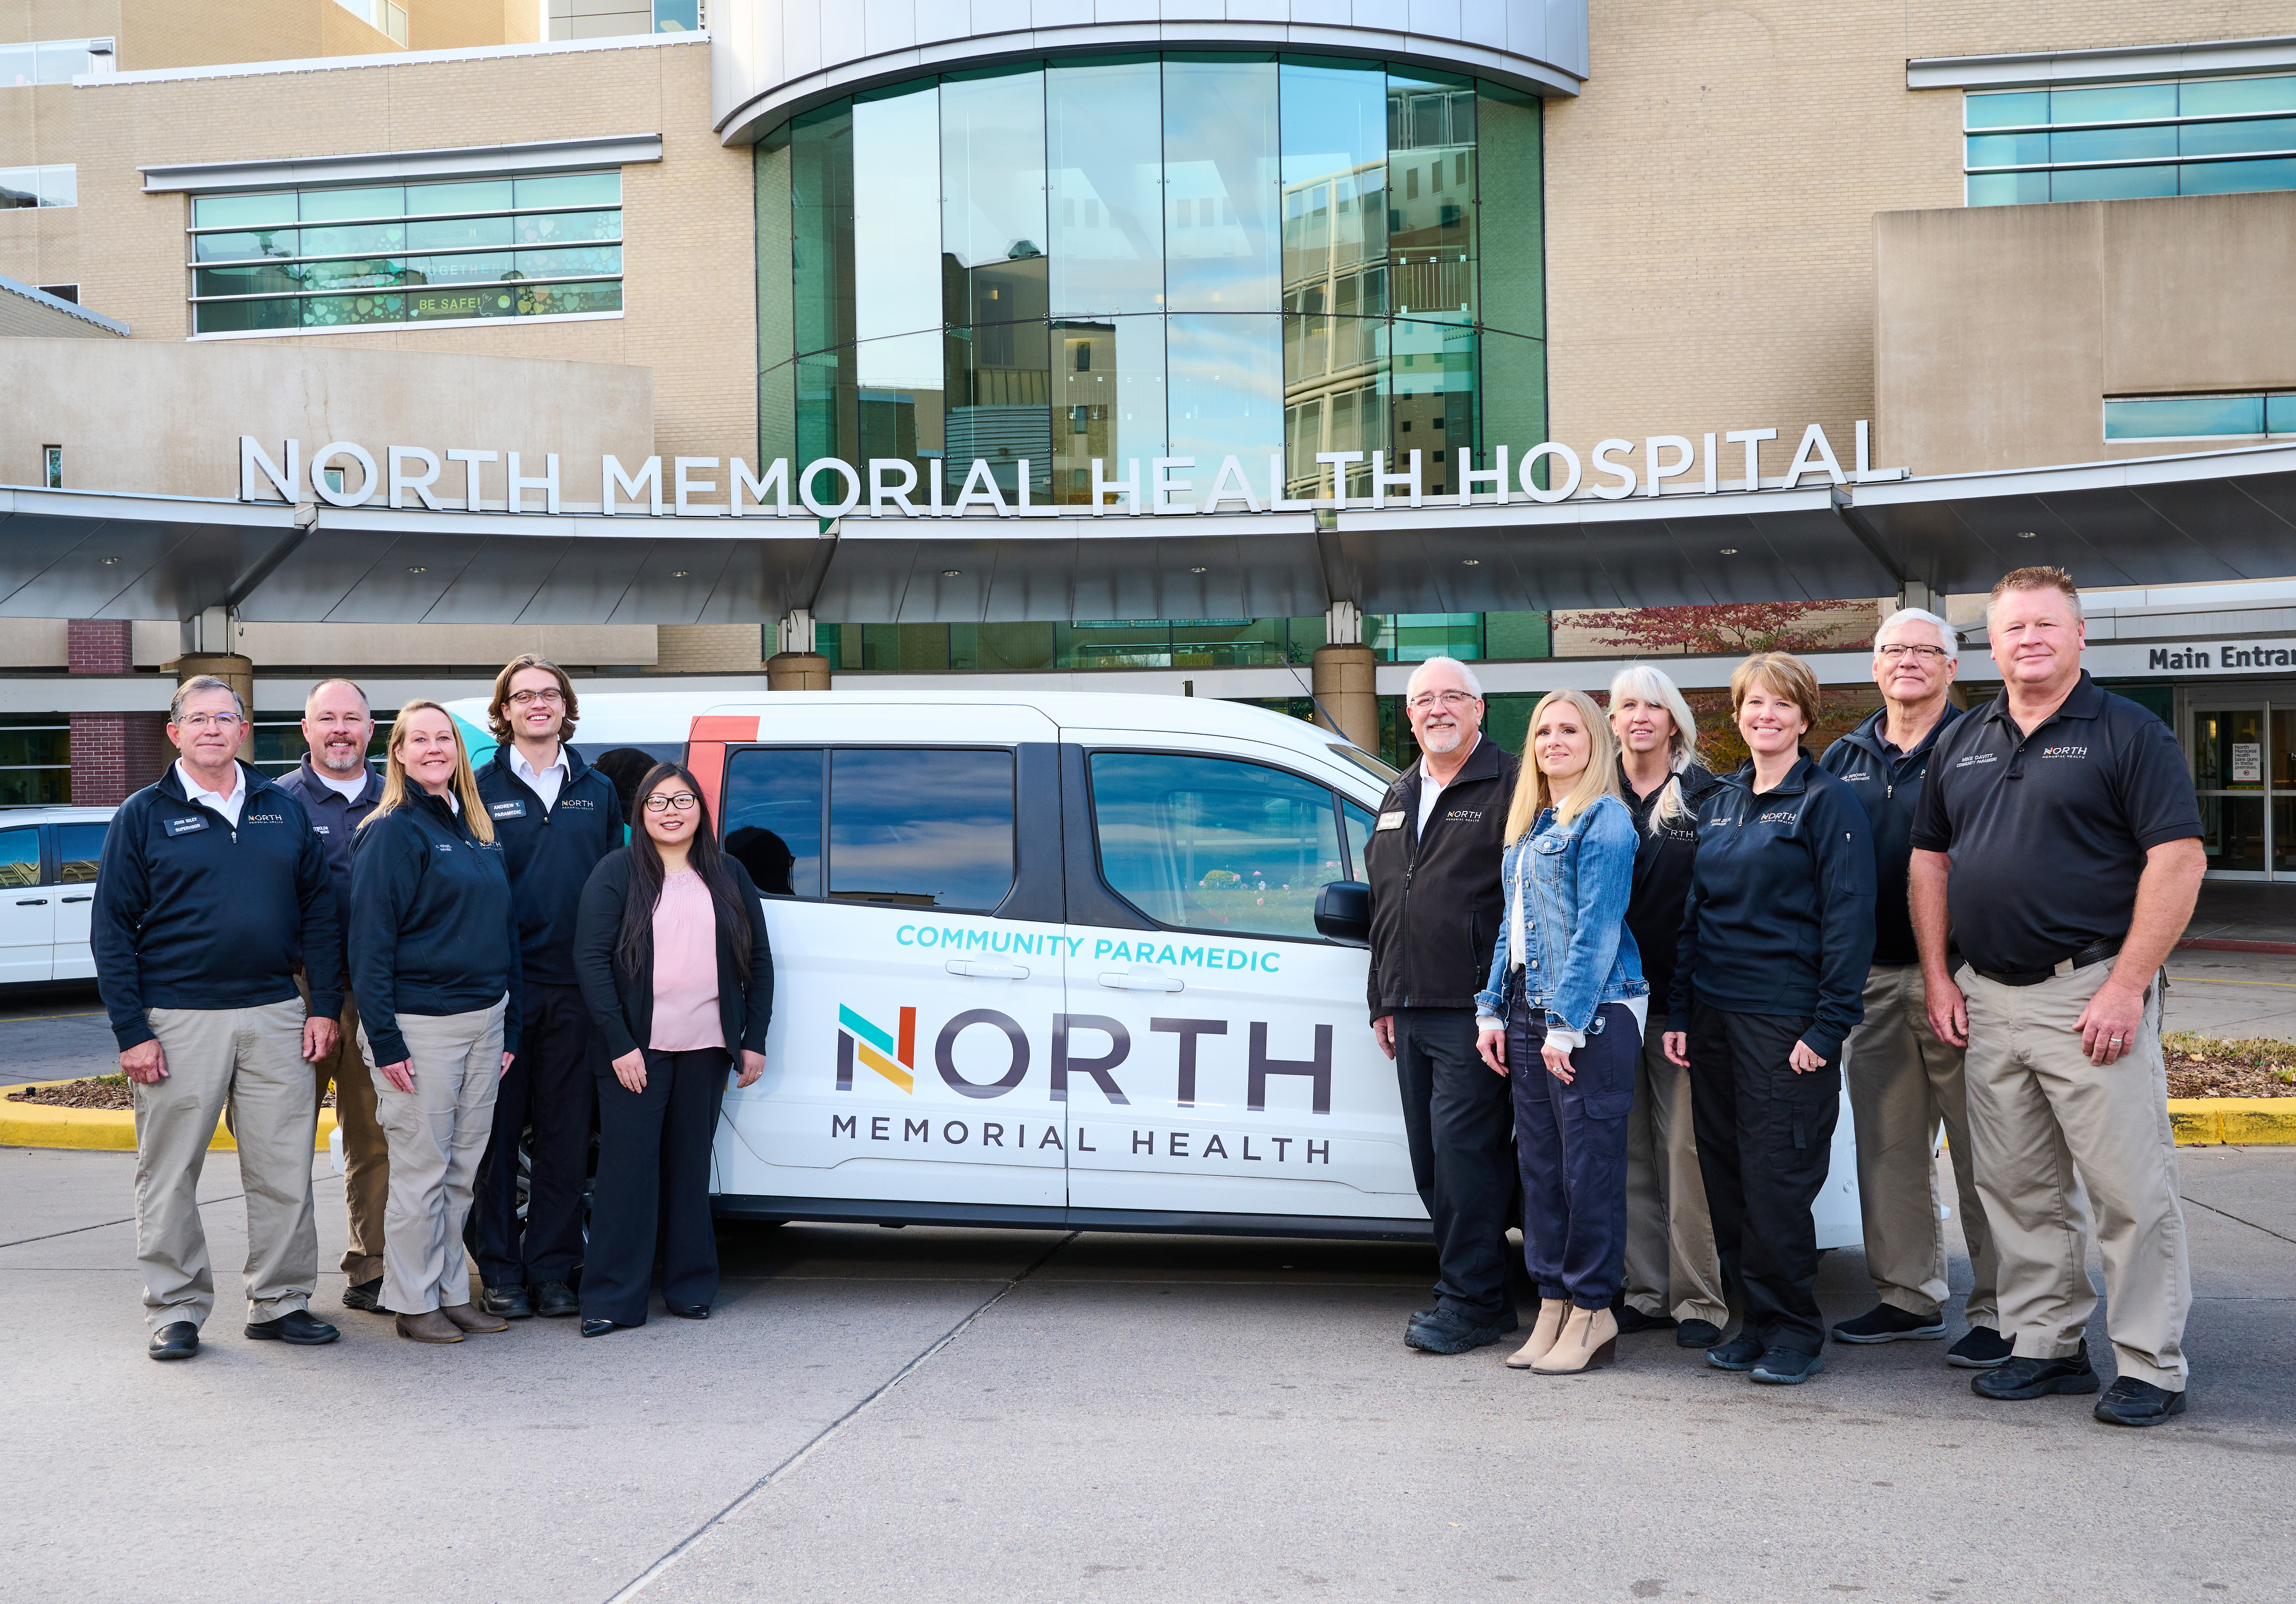 North Memorial Mobile Clinic